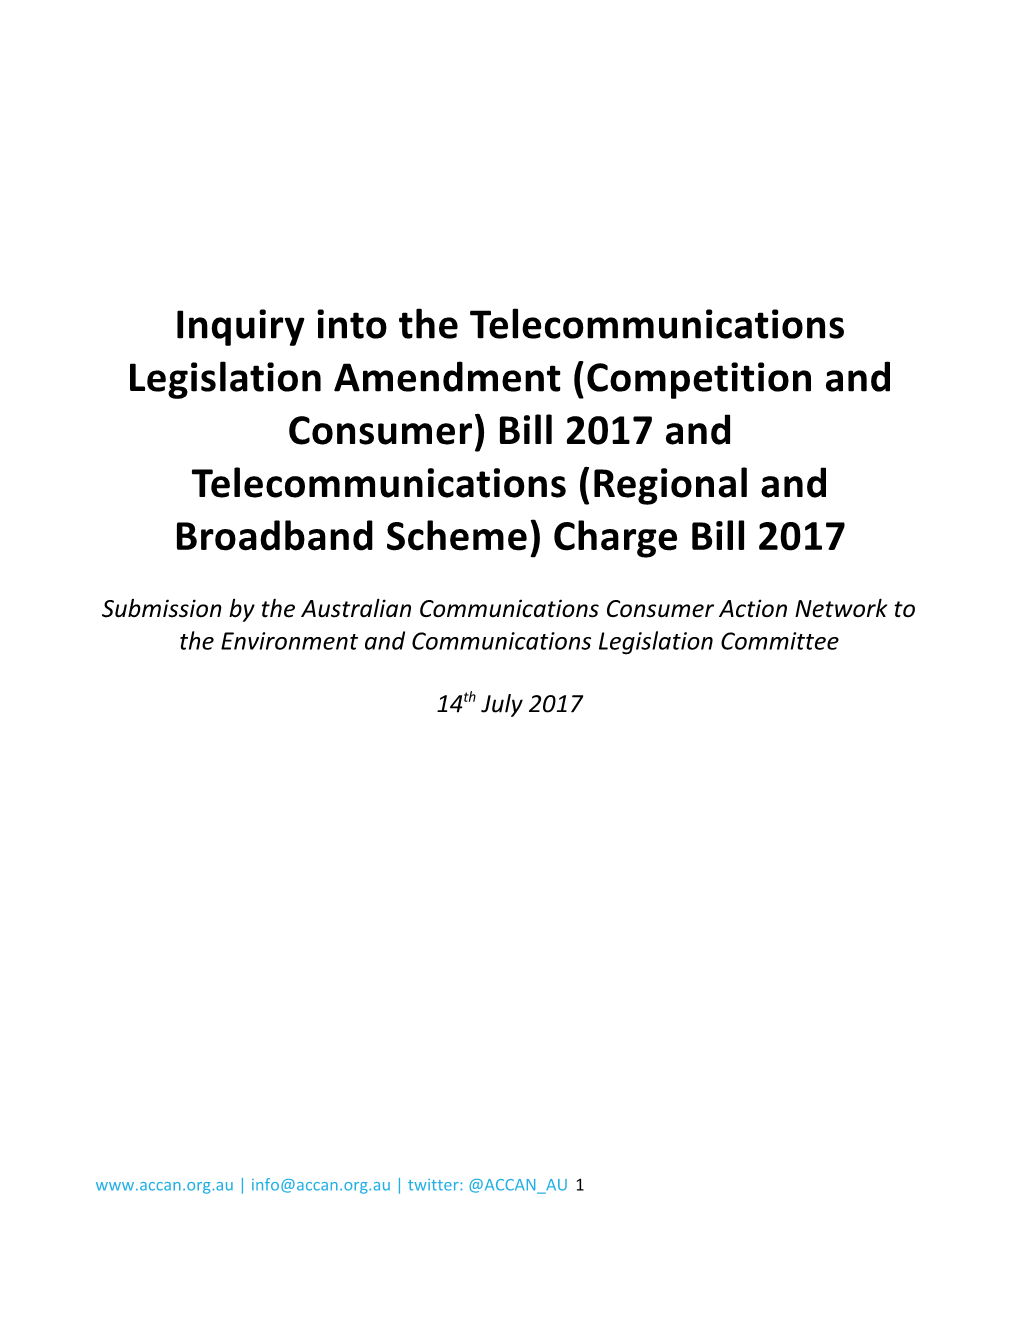 Inquiry Into the Telecommunications Legislation Amendment (Competition and Consumer) Bill